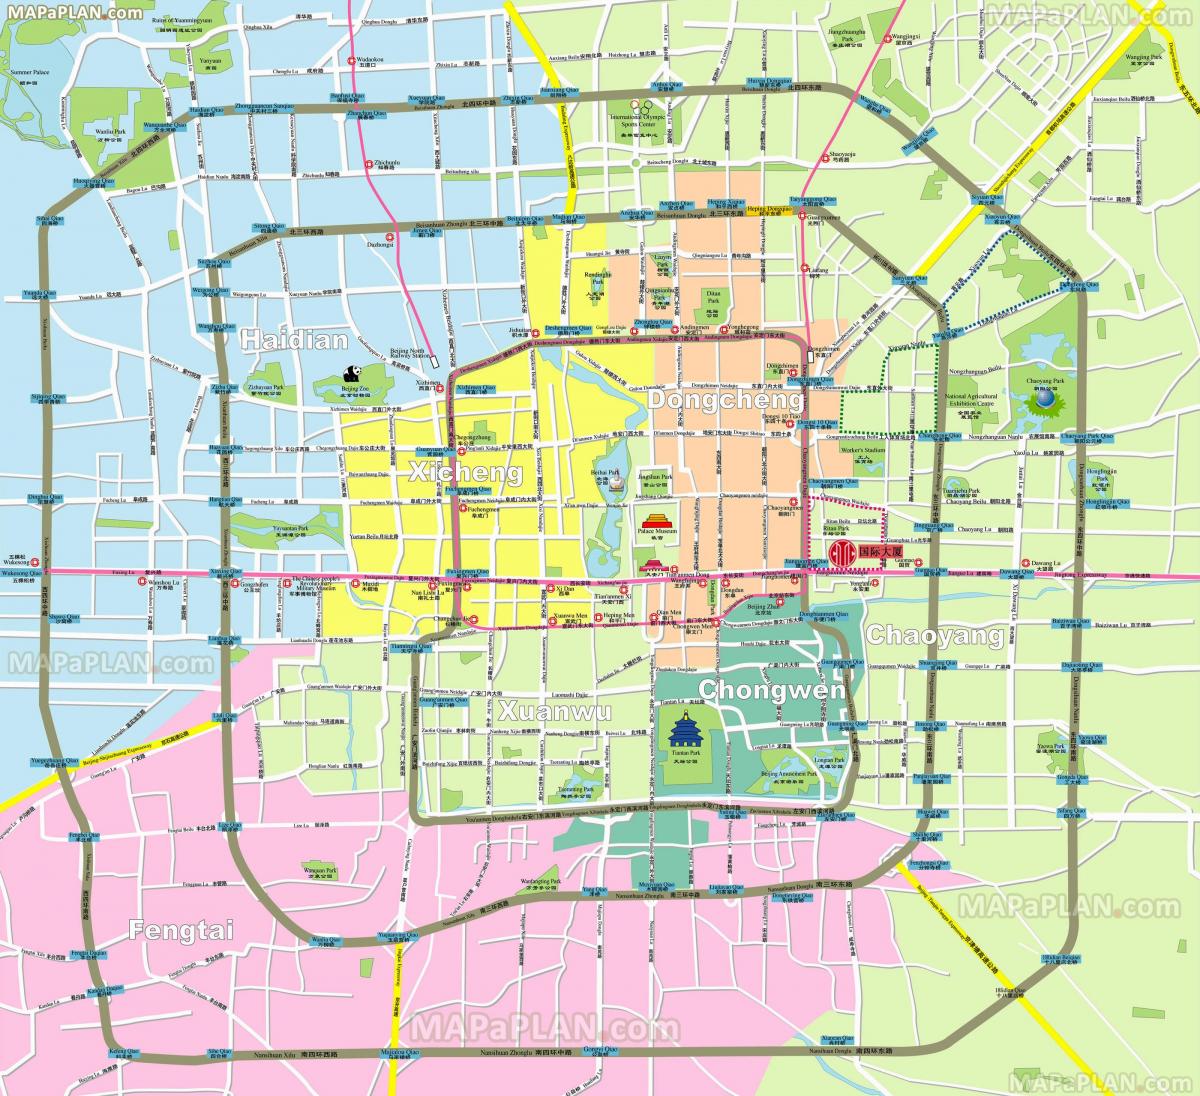 Plan des quartiers de Beijing (Peking)